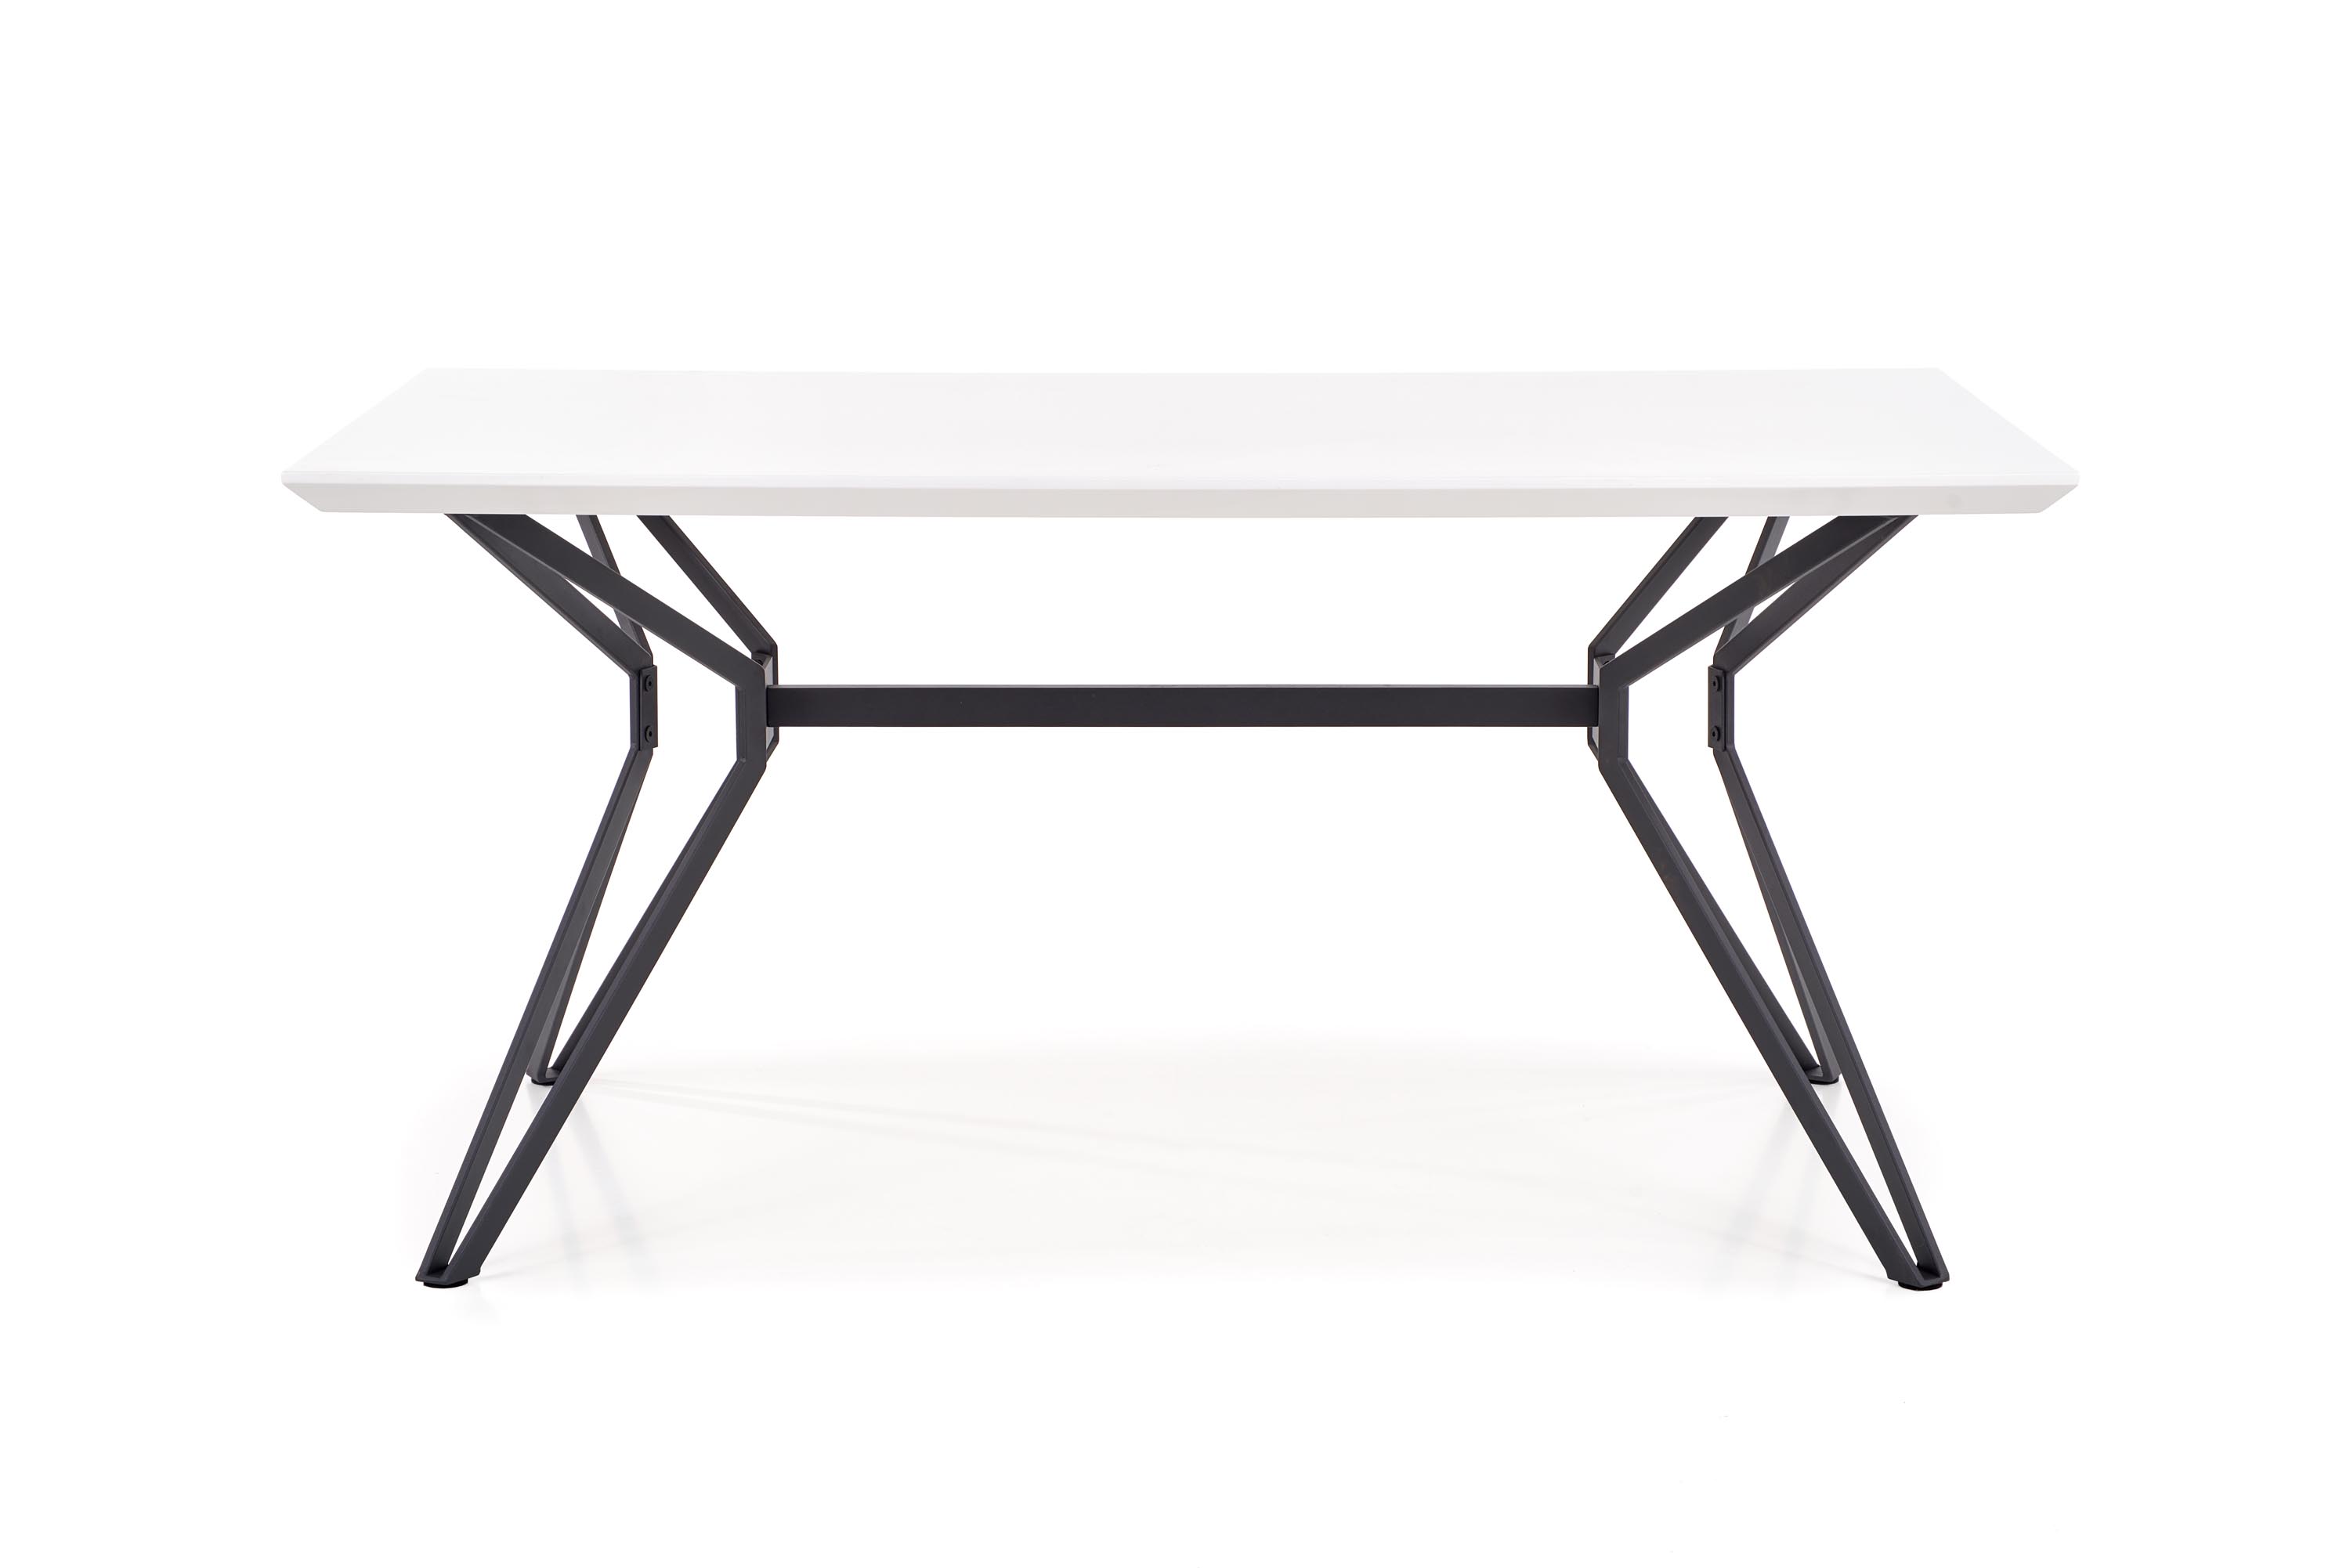 Stůl Pascal - bílý / Fekete stůl pascal - bílý / Fekete